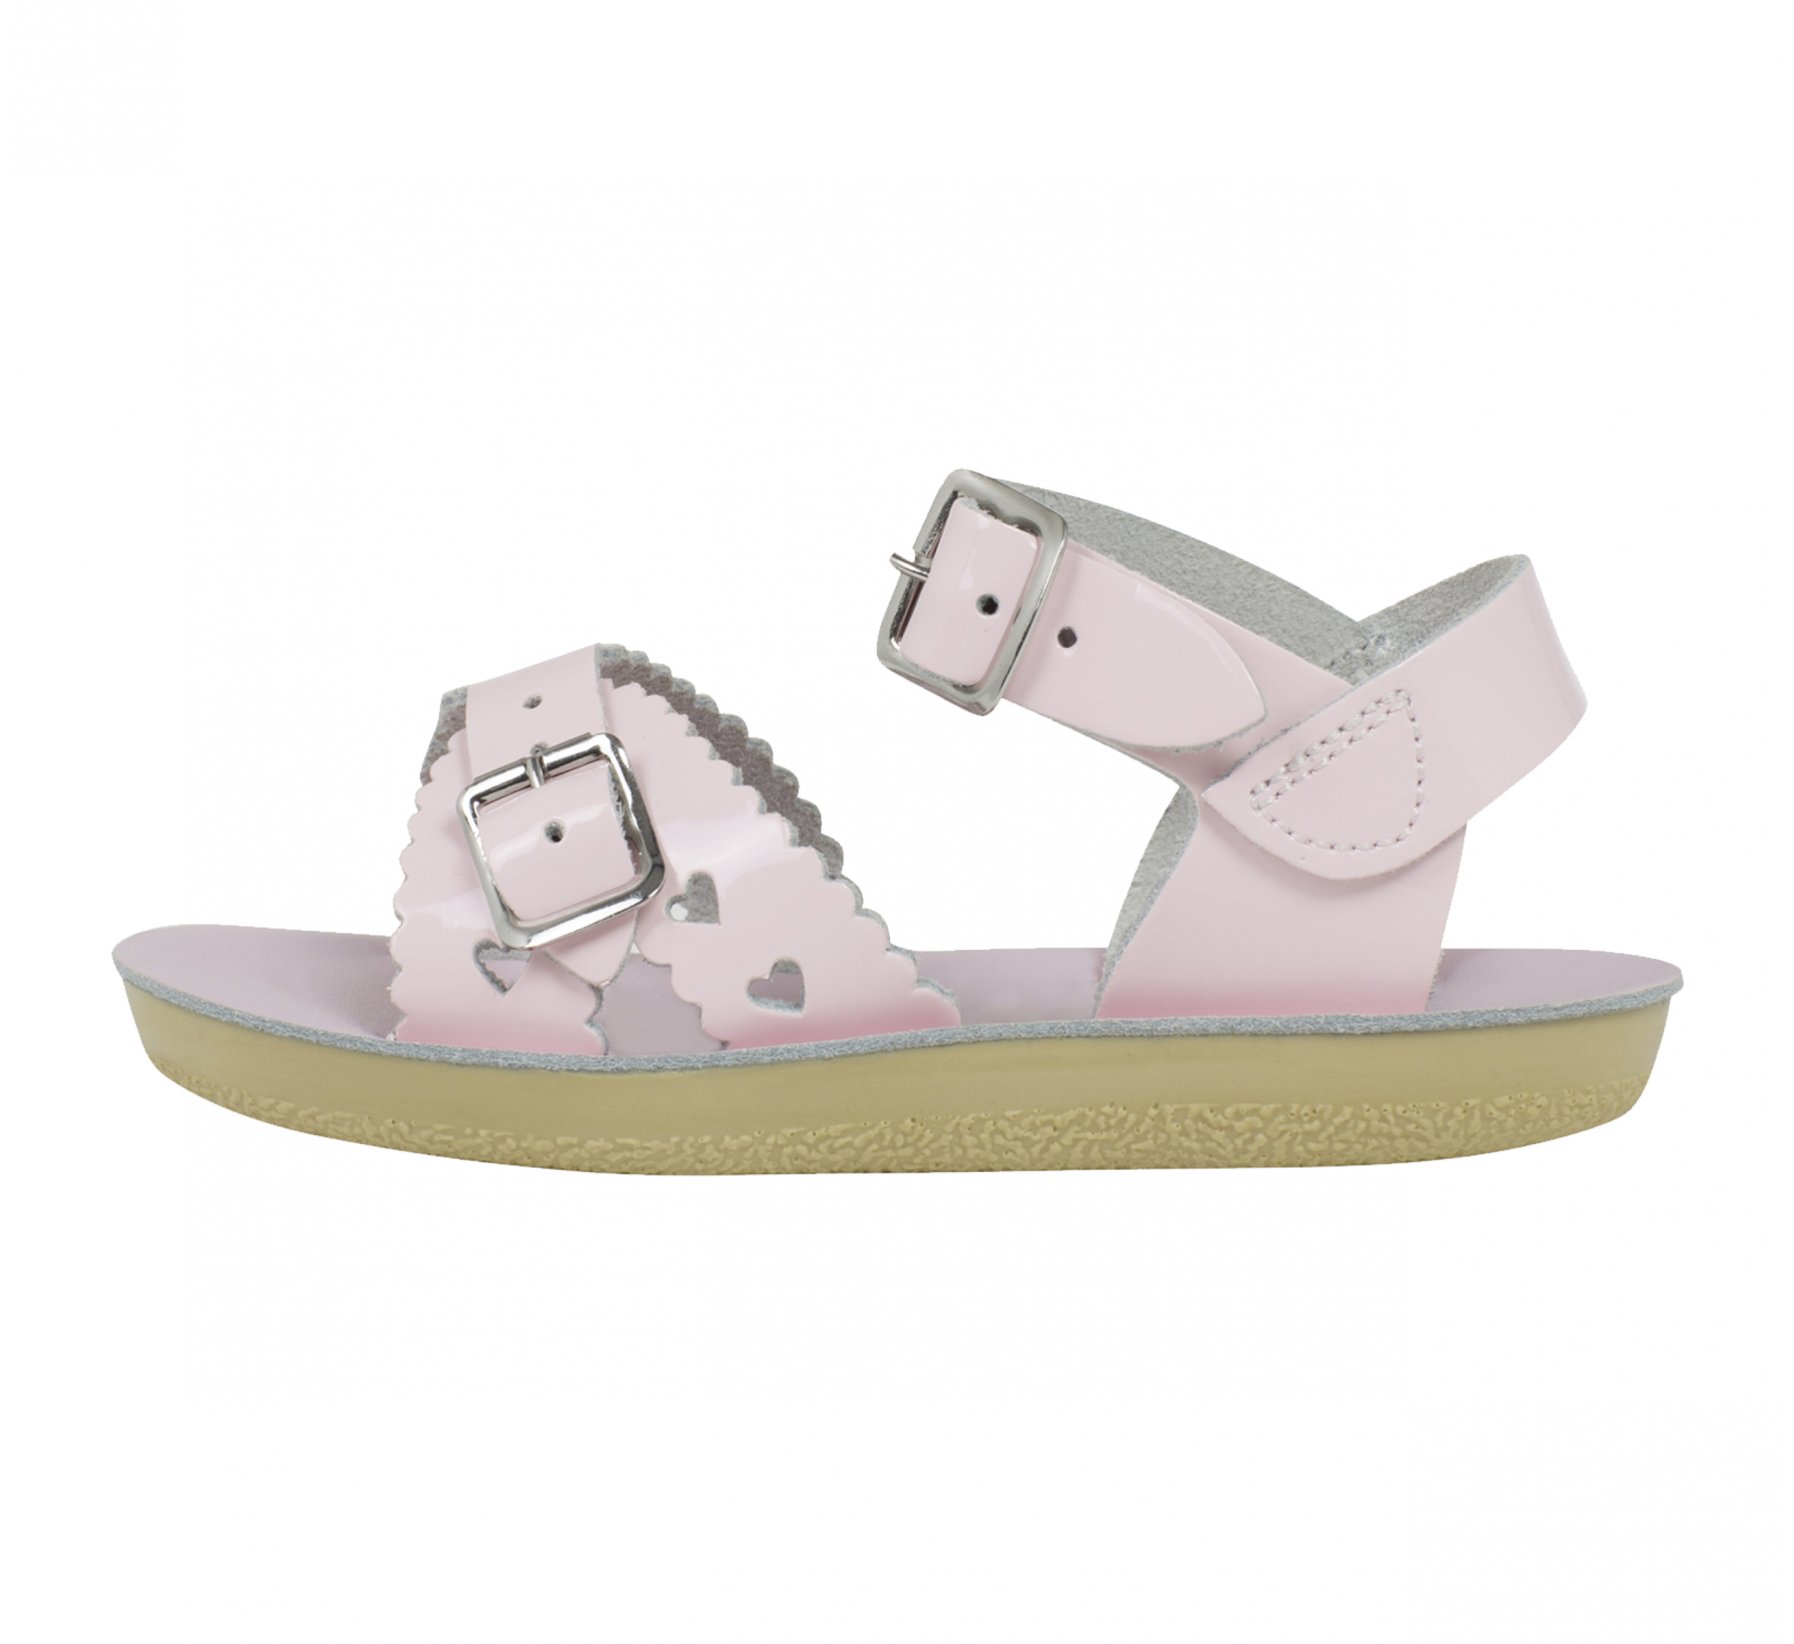 Sweetheart Shiny Pink Kids Sandals - Salt Water Sandals